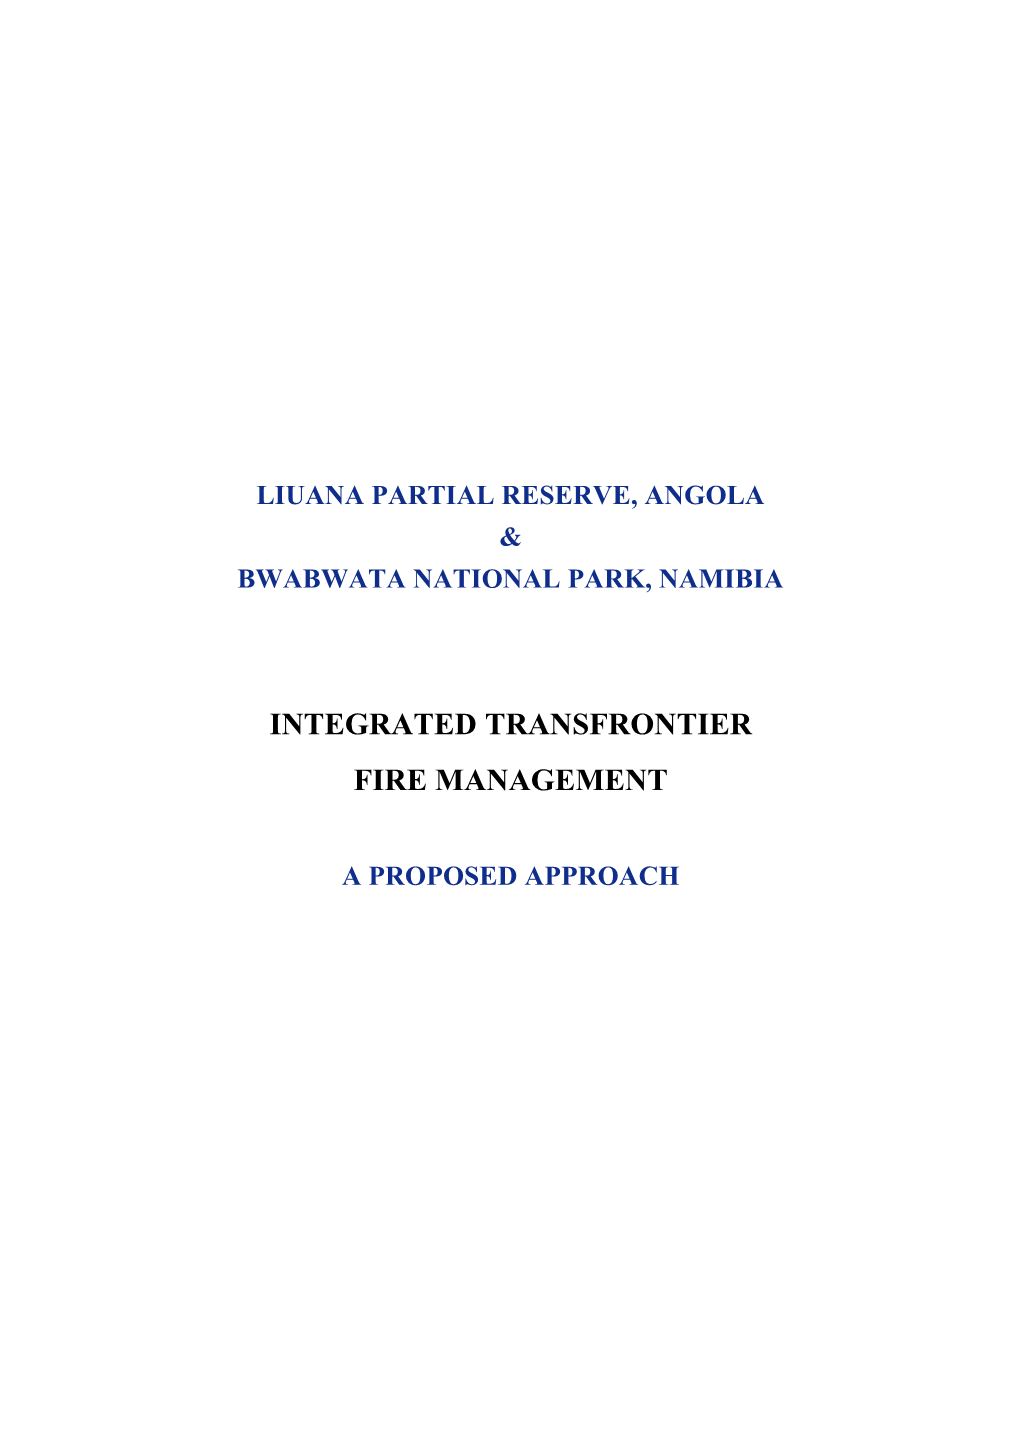 Luiana-Bwabwata Transfrontier IFM Approach August 2014 GH.Pdf